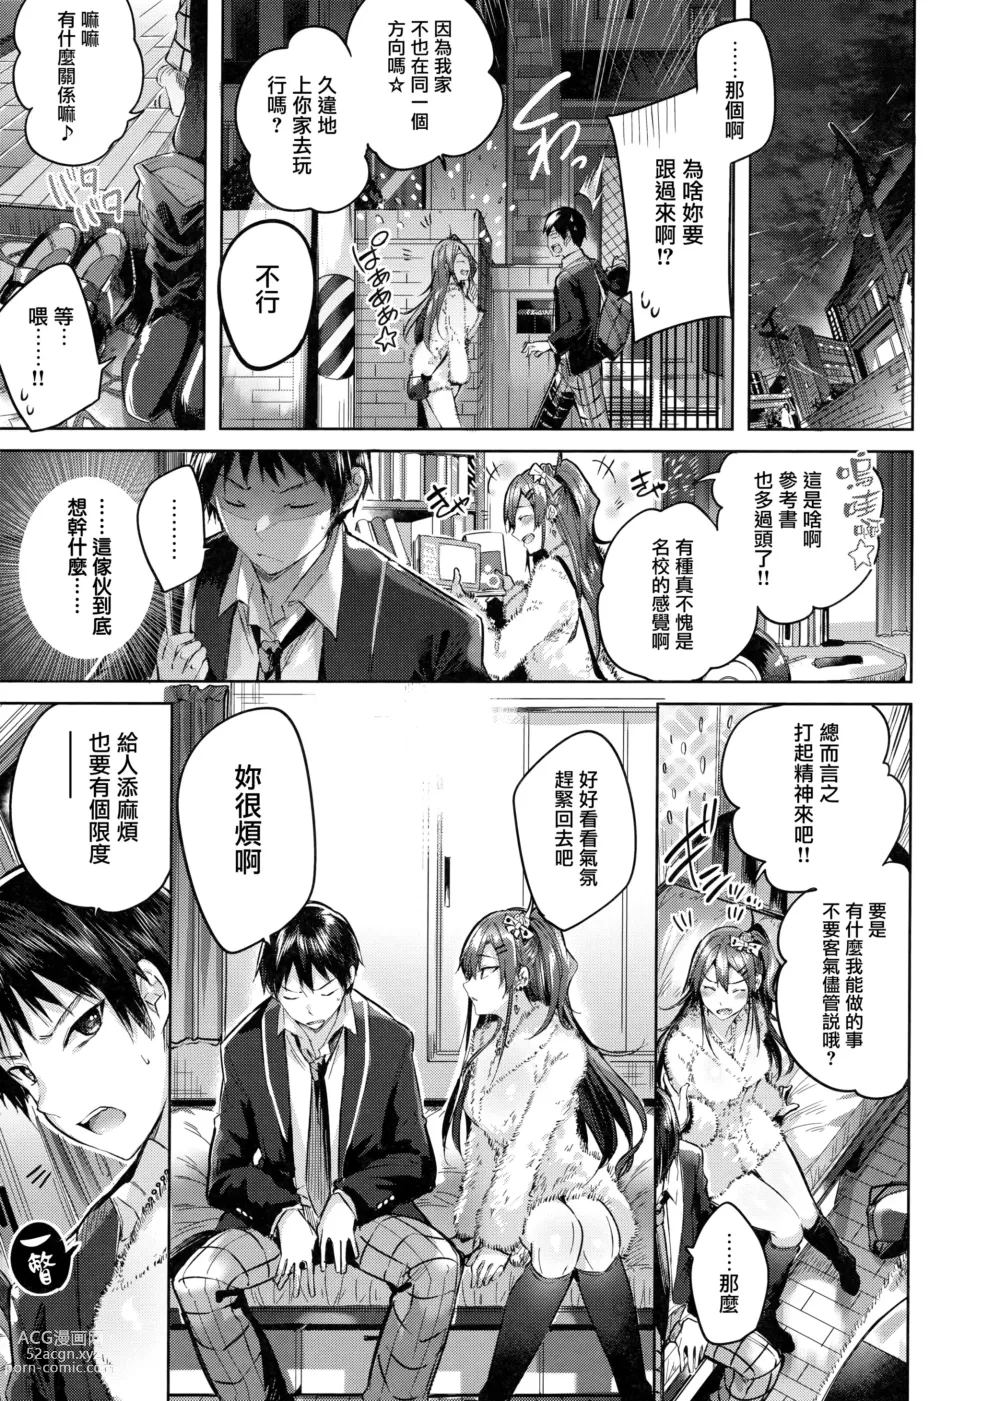 Page 13 of manga Nakadashi Strike! - Winning strike!